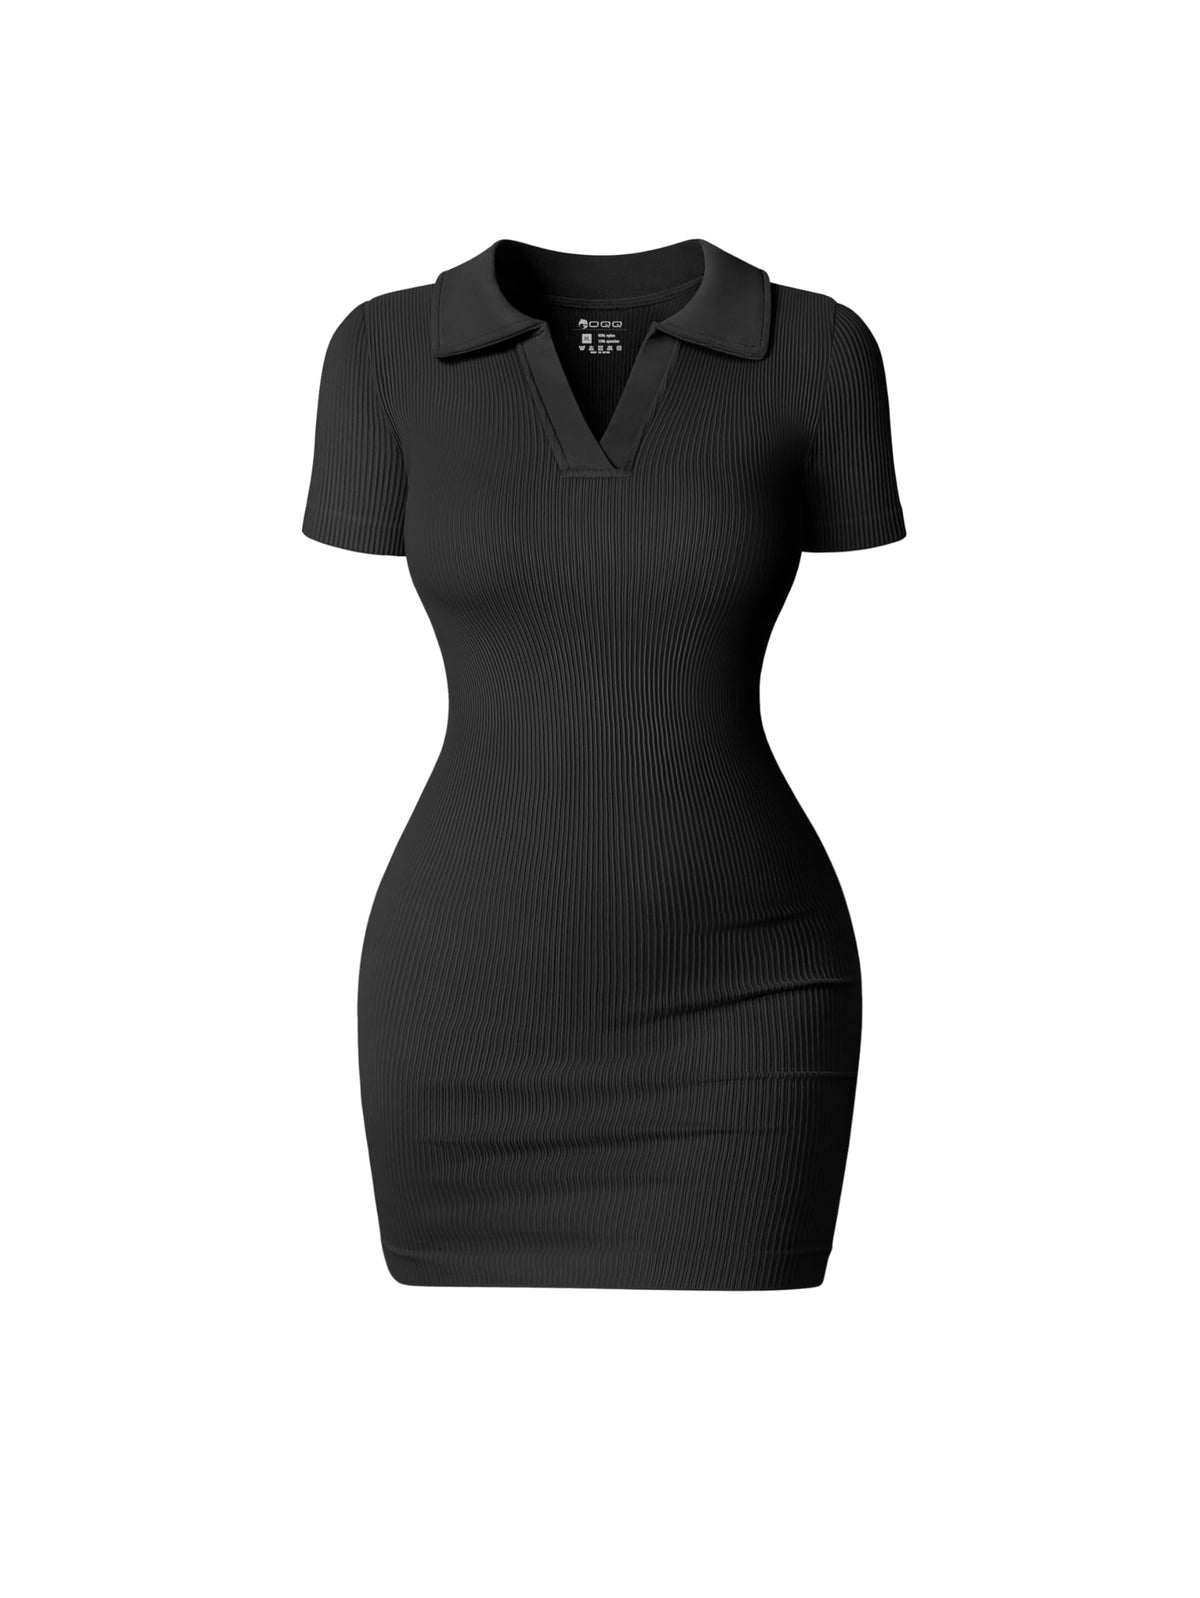 OQQ Women's Mini Dresses Sexy Ribbed Short Sleeve Tummy Control Bodycon Mini Dress Black